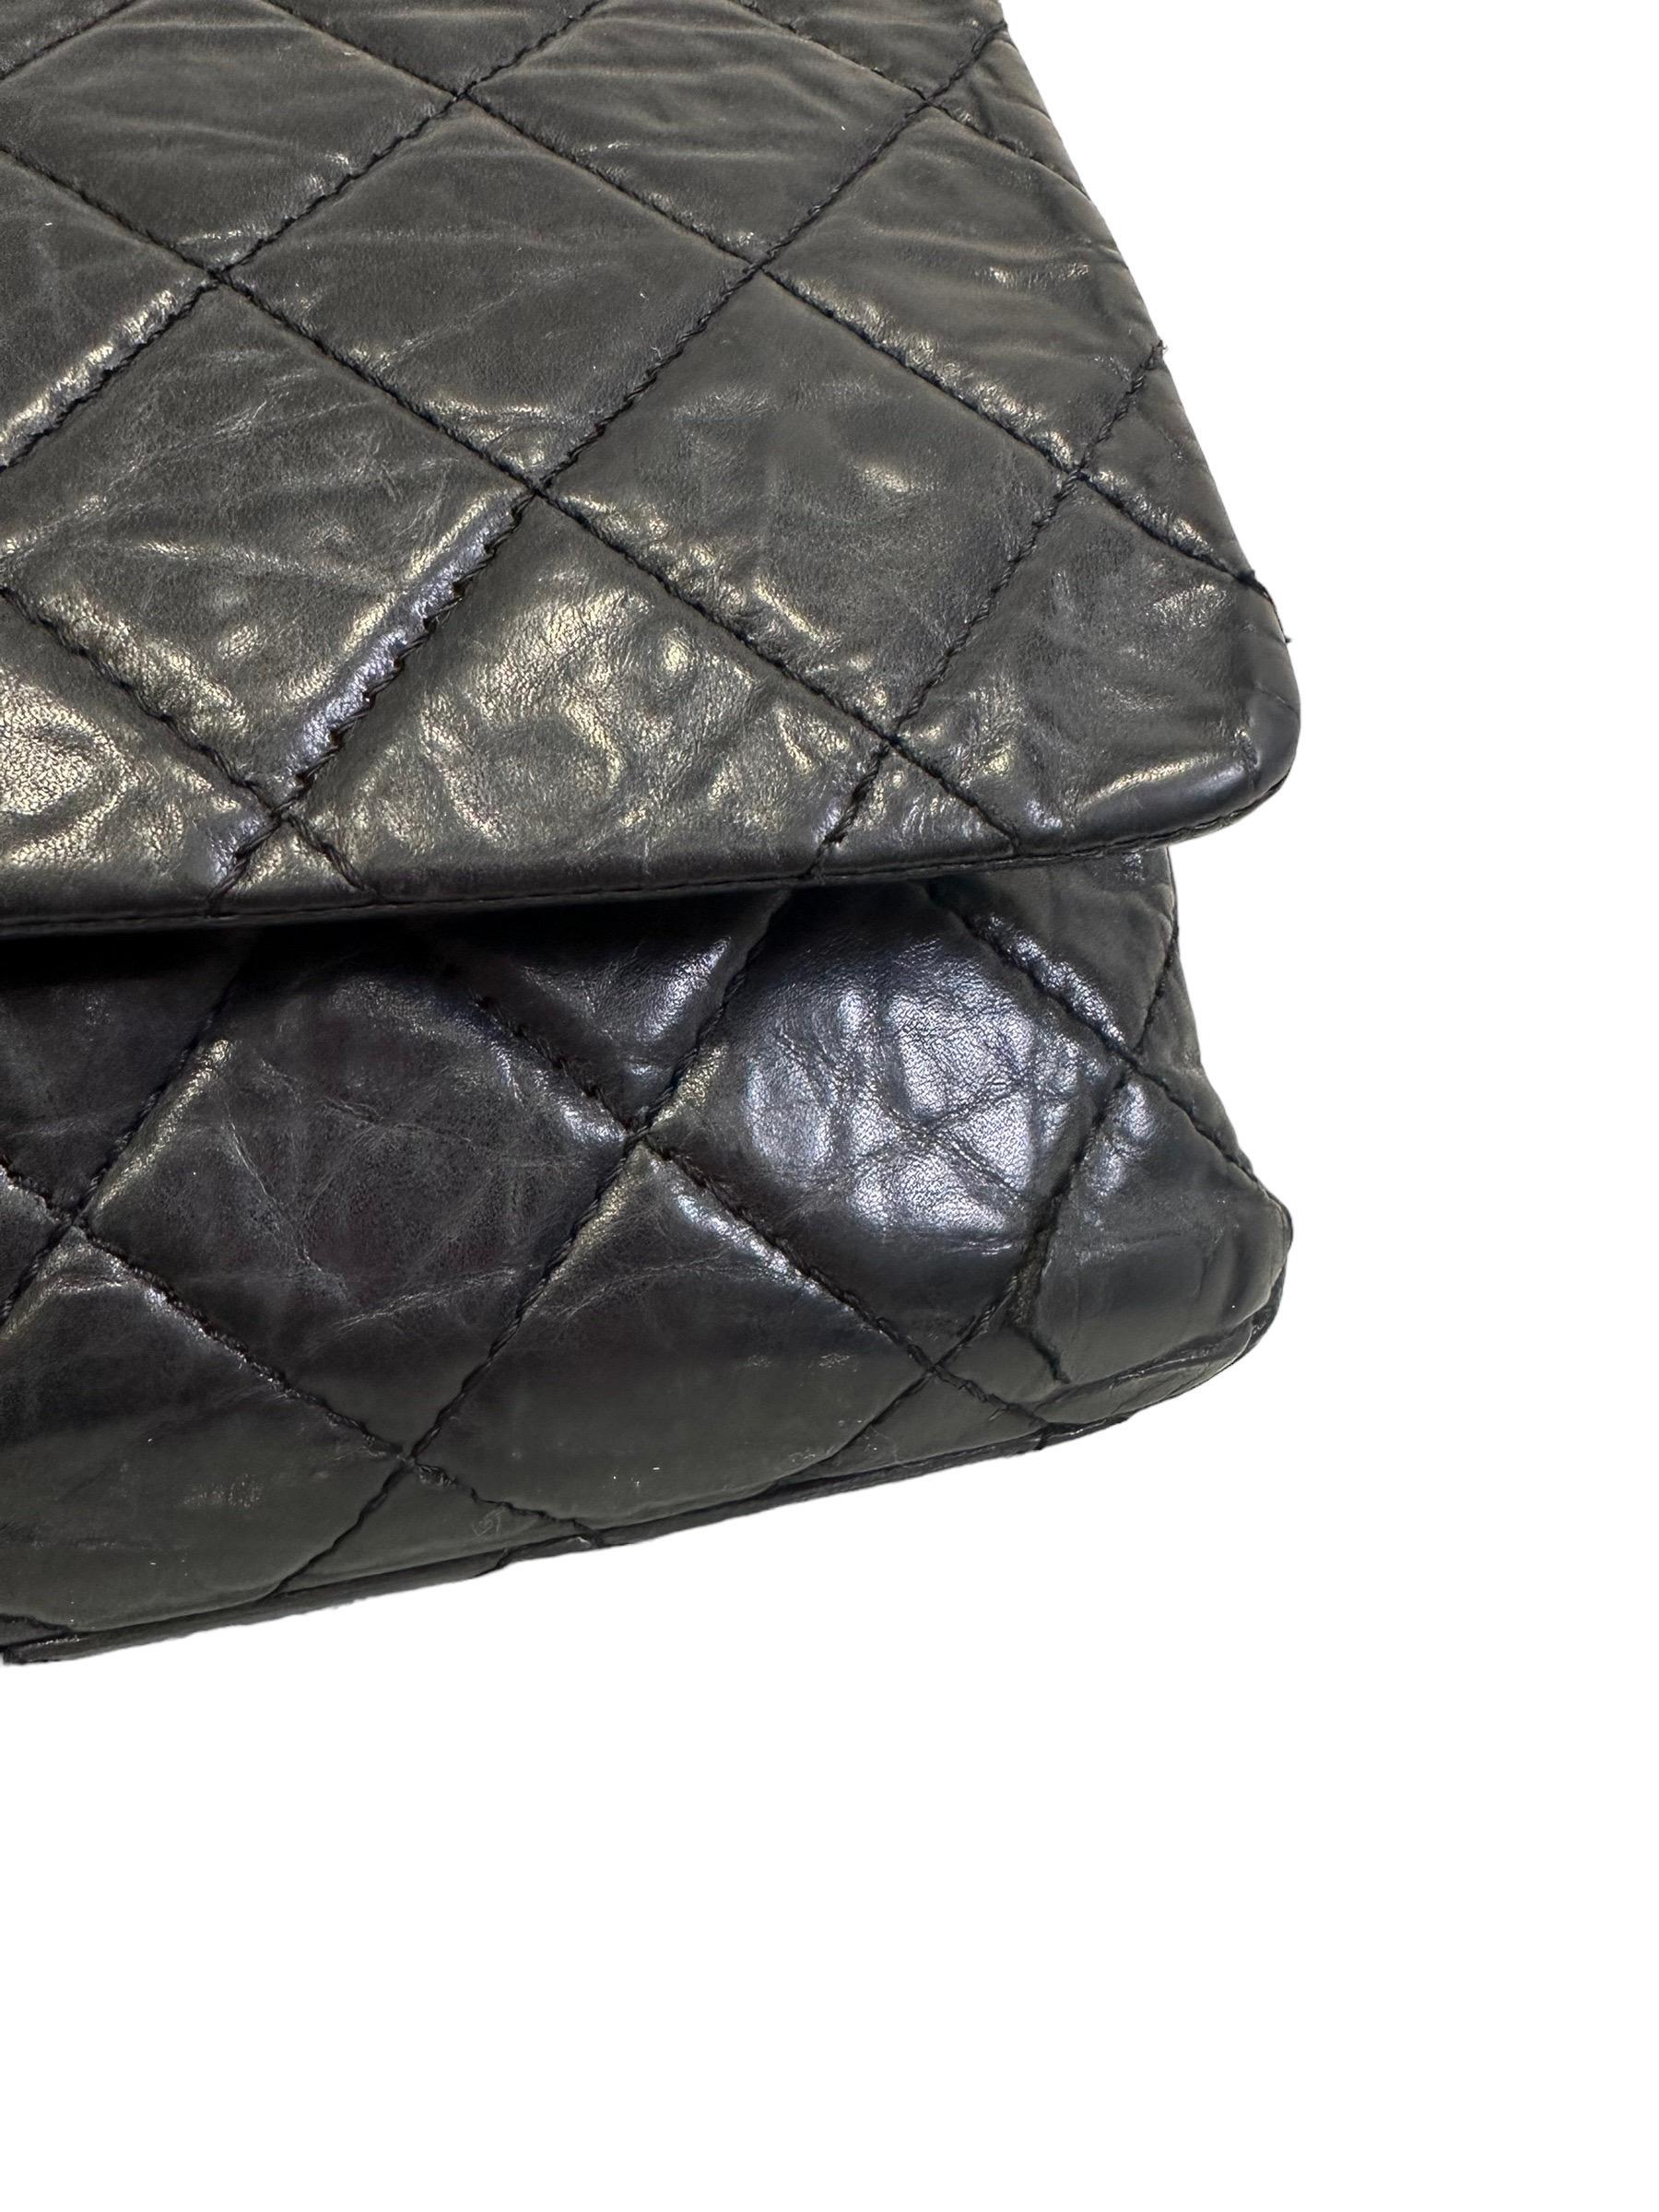 Women's 2008 Chanel Reissue Maxi Jumbo Blue Top Shoulder Bag For Sale